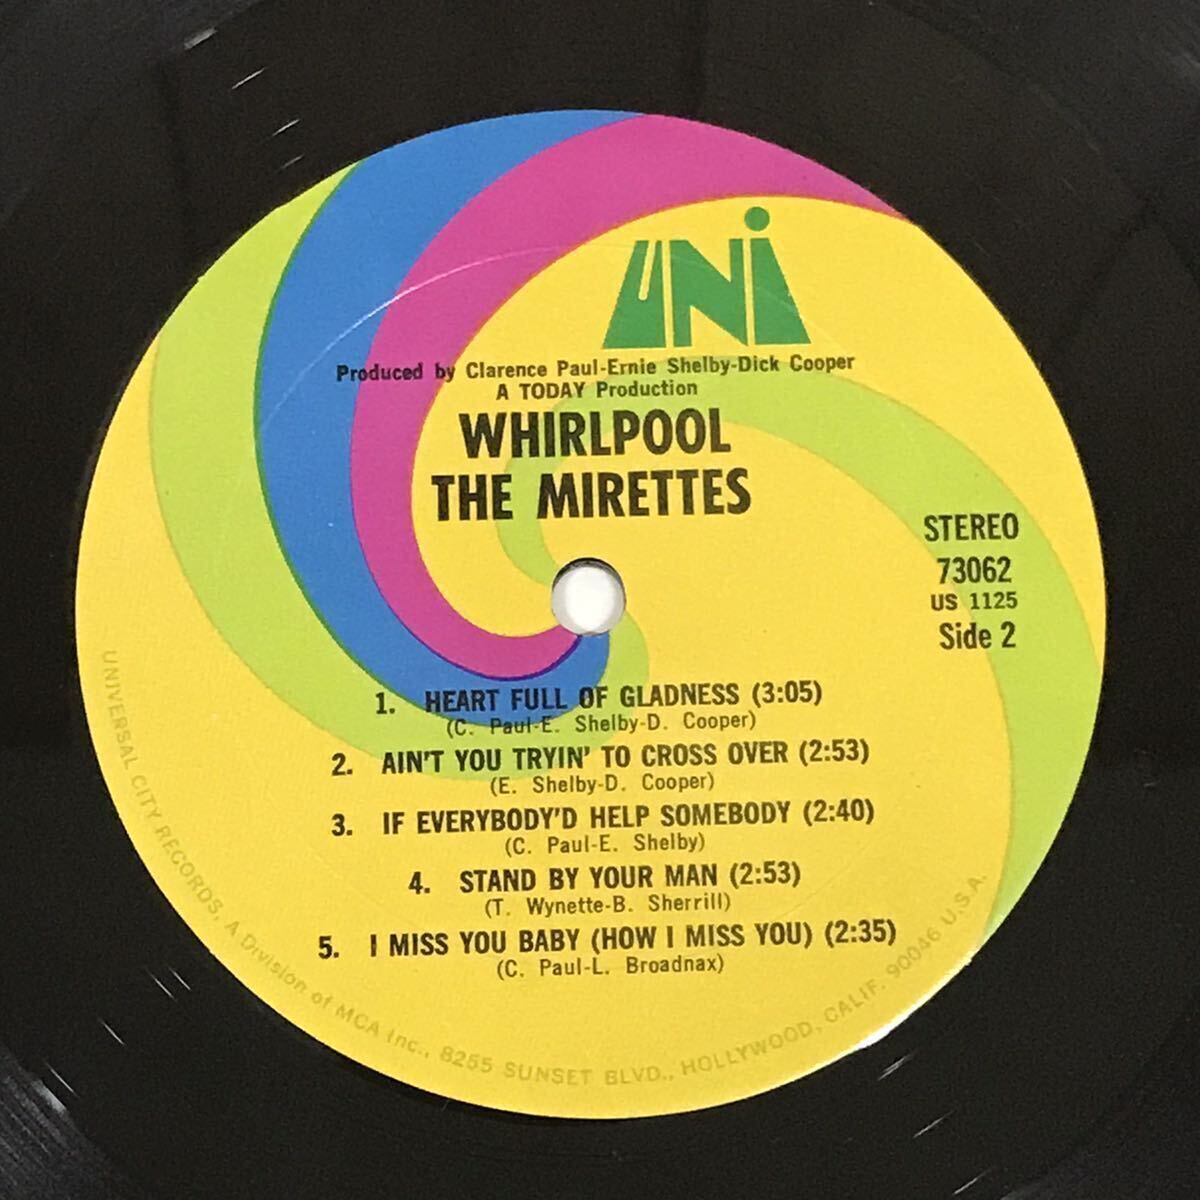 RARE SOUL “PETE ROCK”ネタUSオリジナル盤THE MIRETTES / WHIRLPOOL on UNI RECORDS レアソウル SISTER FUNK US ORIGINAL PRESS_画像8